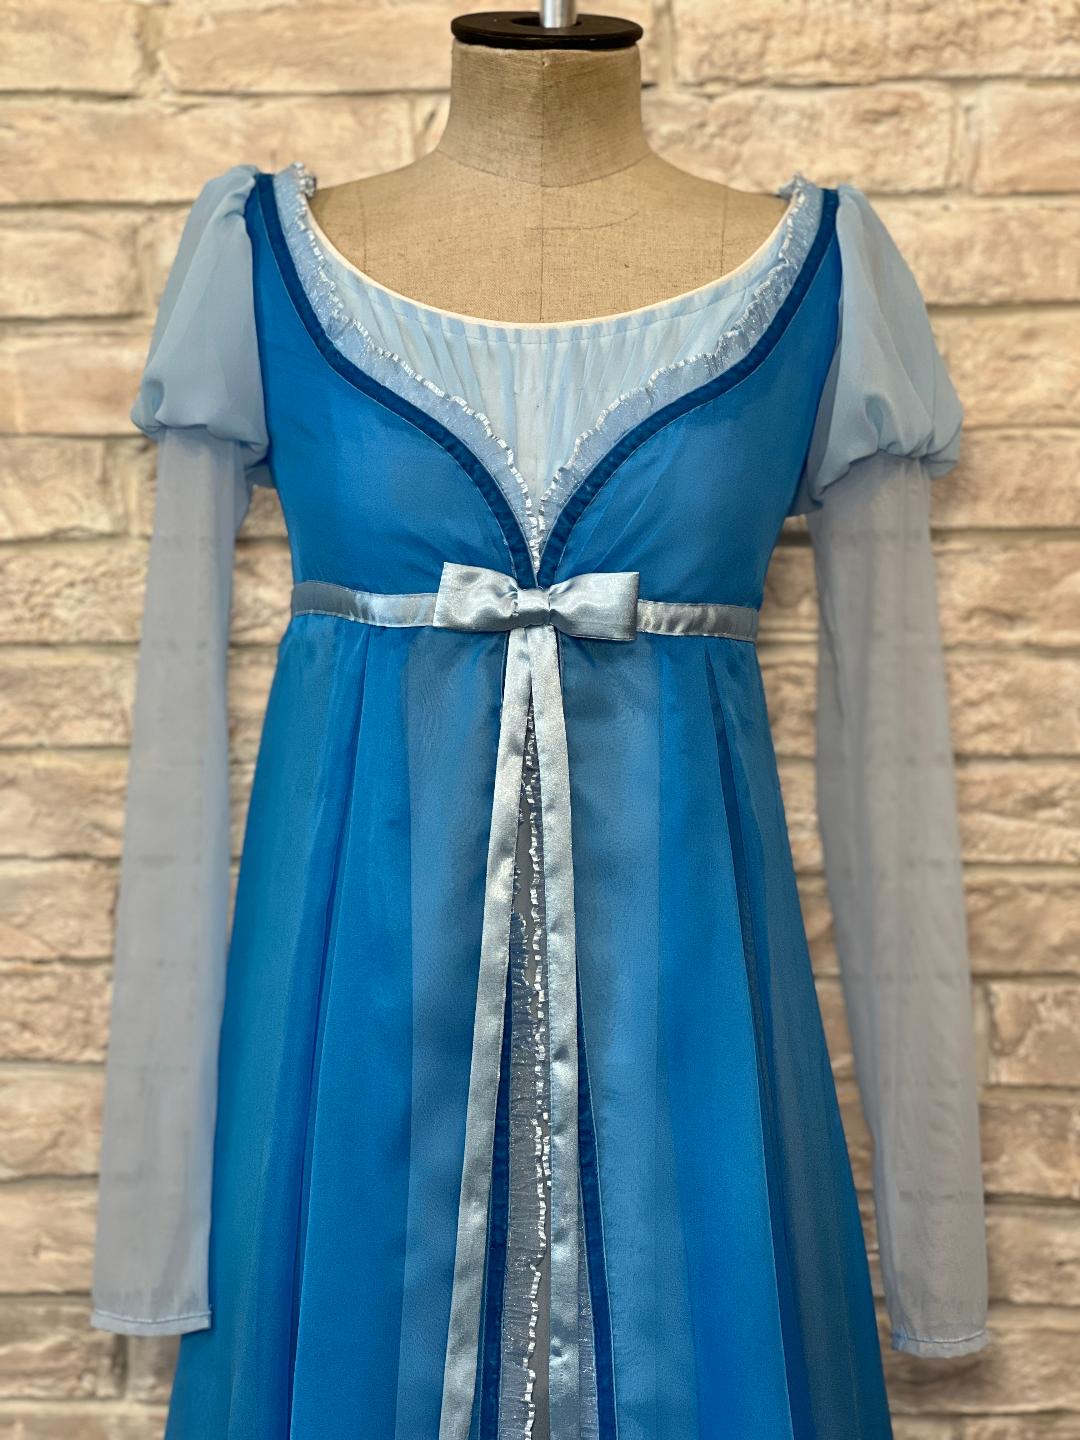 Macha's Nightgown - Dancewear by Patricia